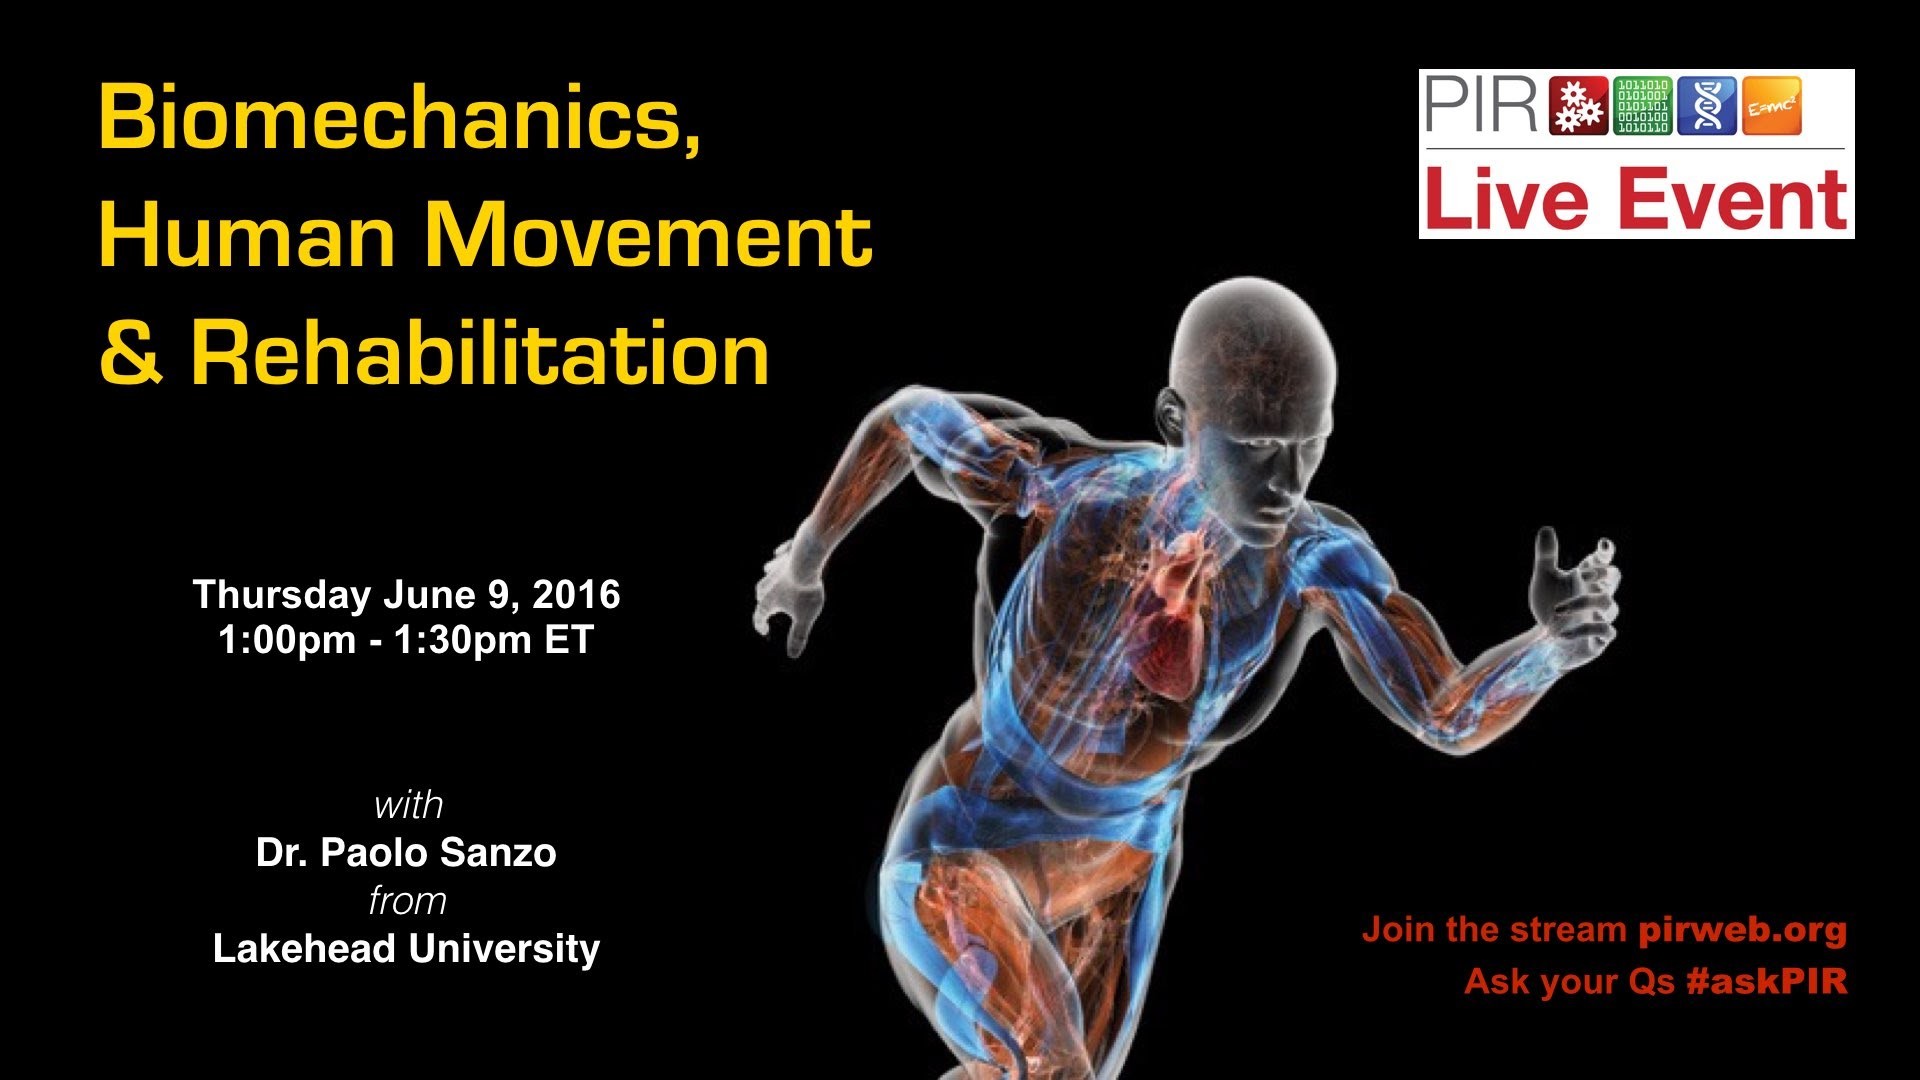 1920x1080 PIR Live Event - Biomechanics, Human Movement & Rehabilitation